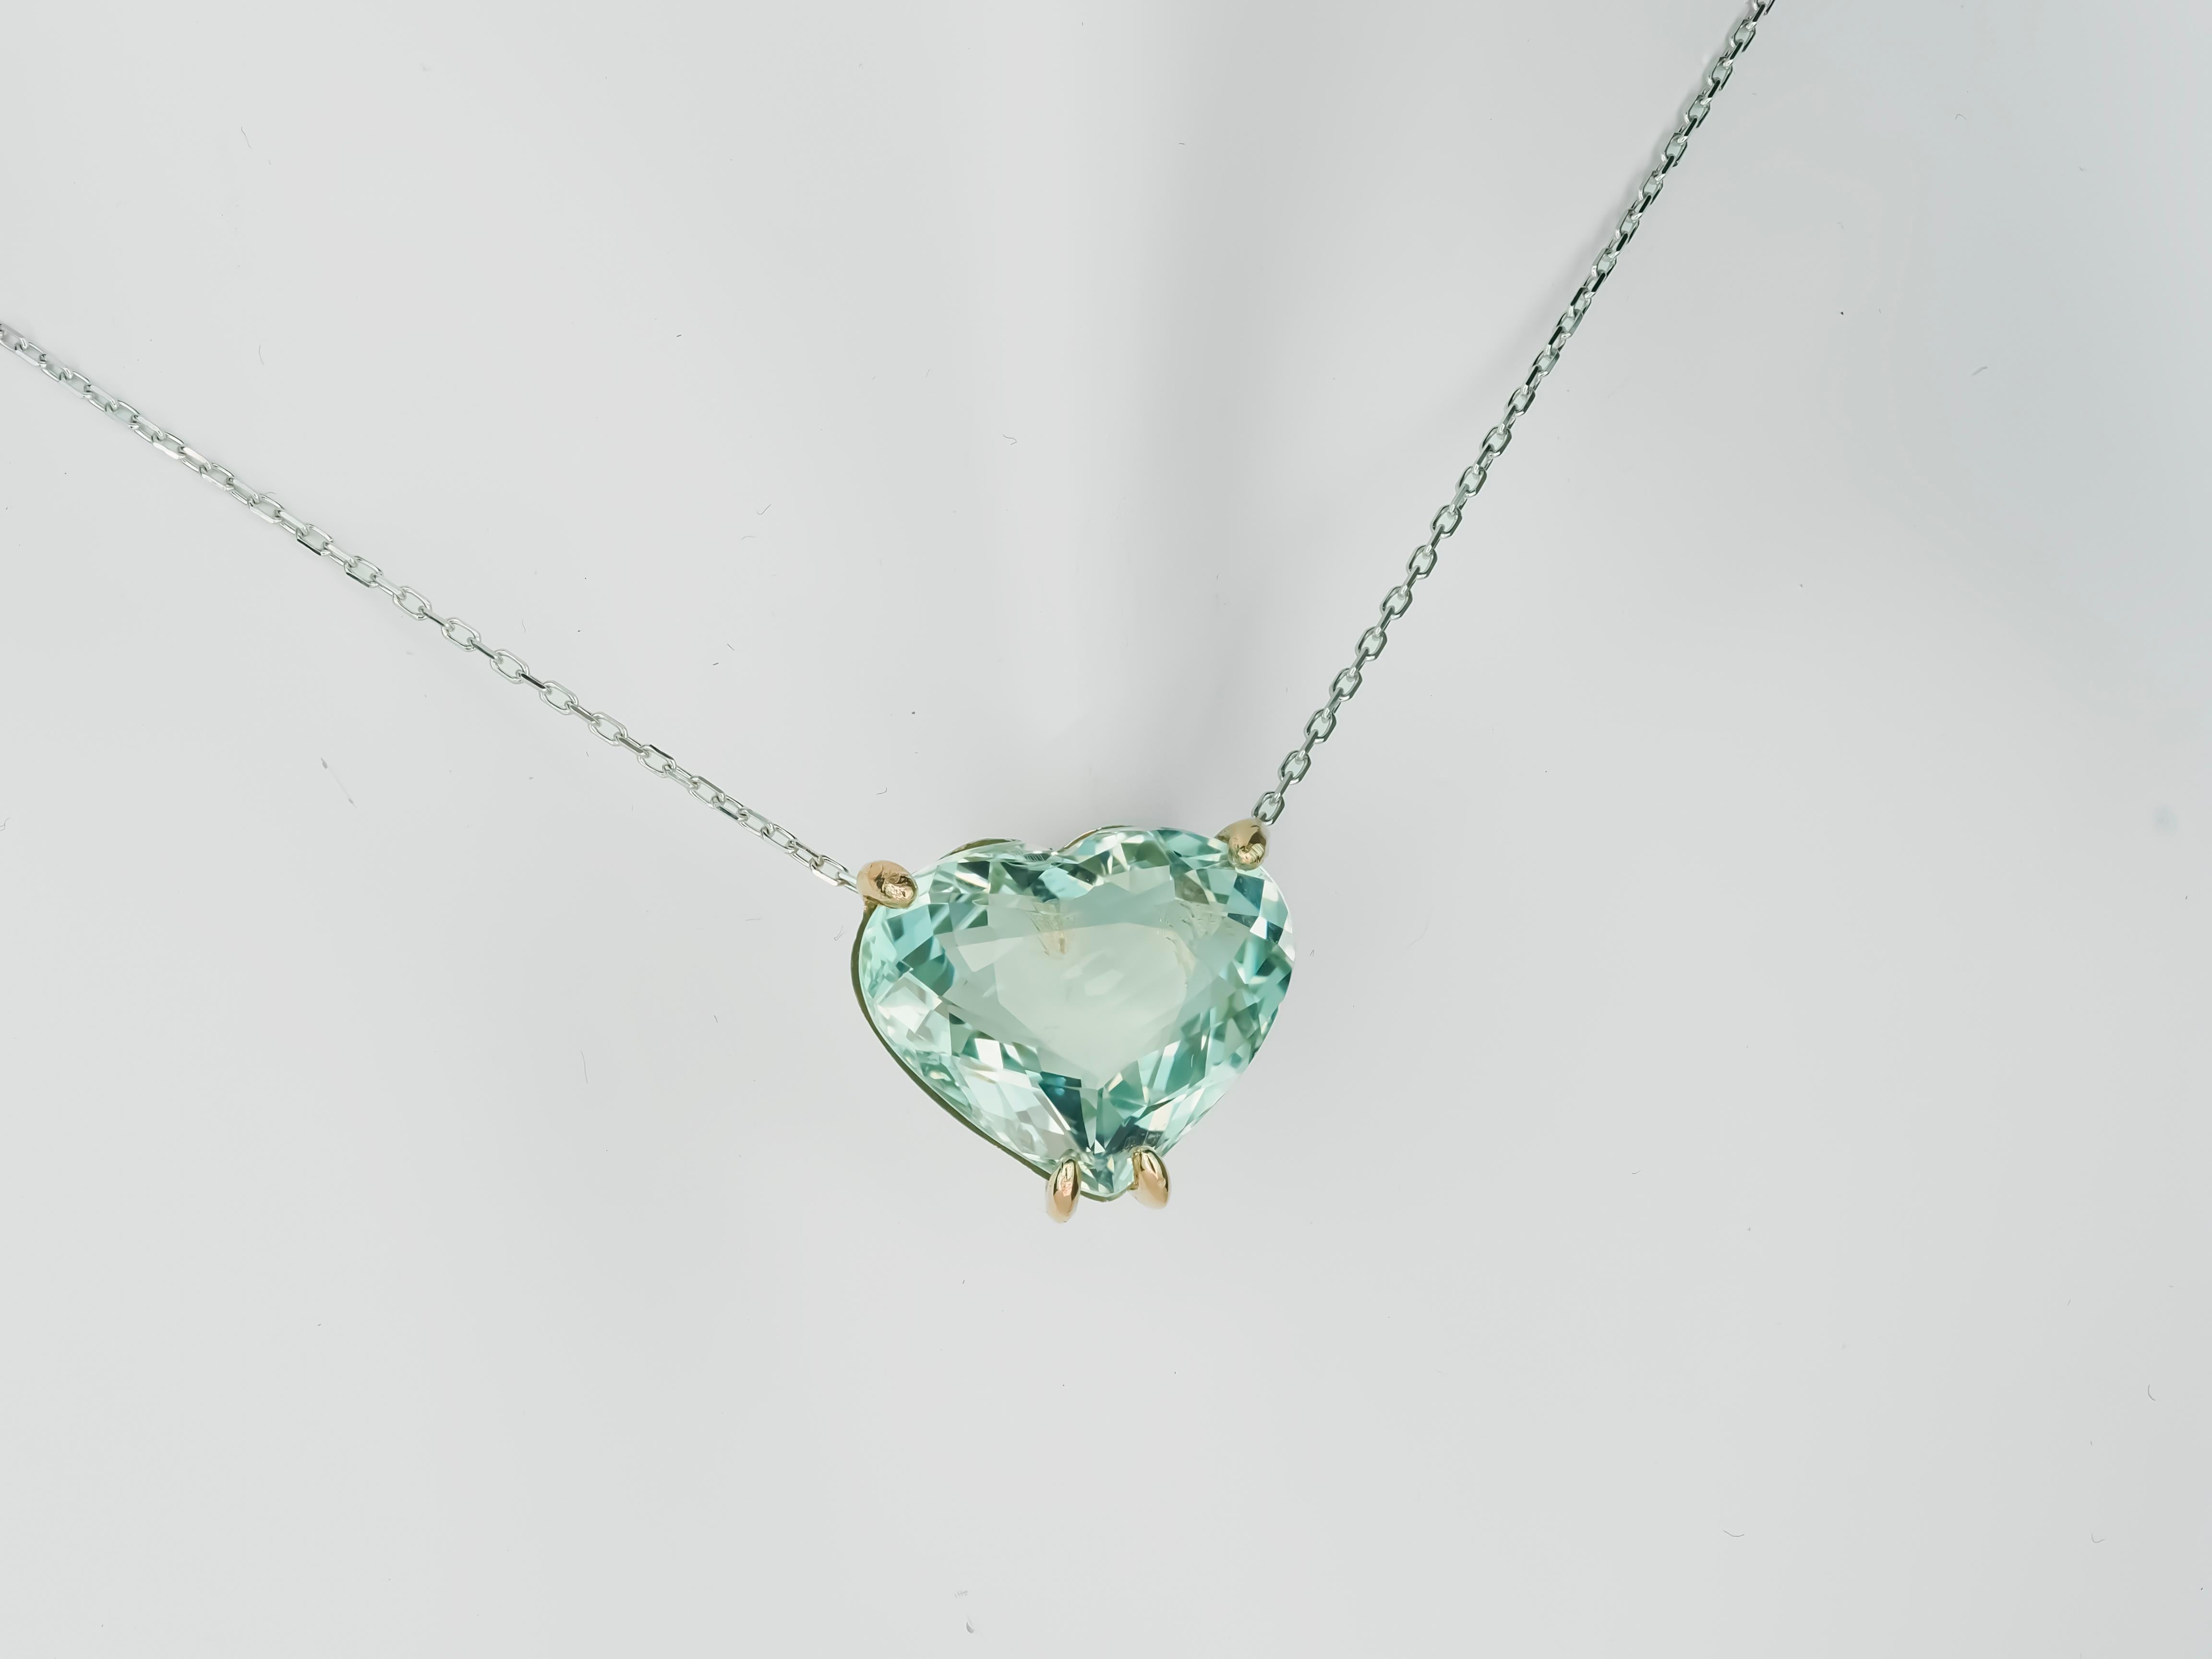 Heart Shaped Aquamarine Pendant Necklace in 14k White Gold 6